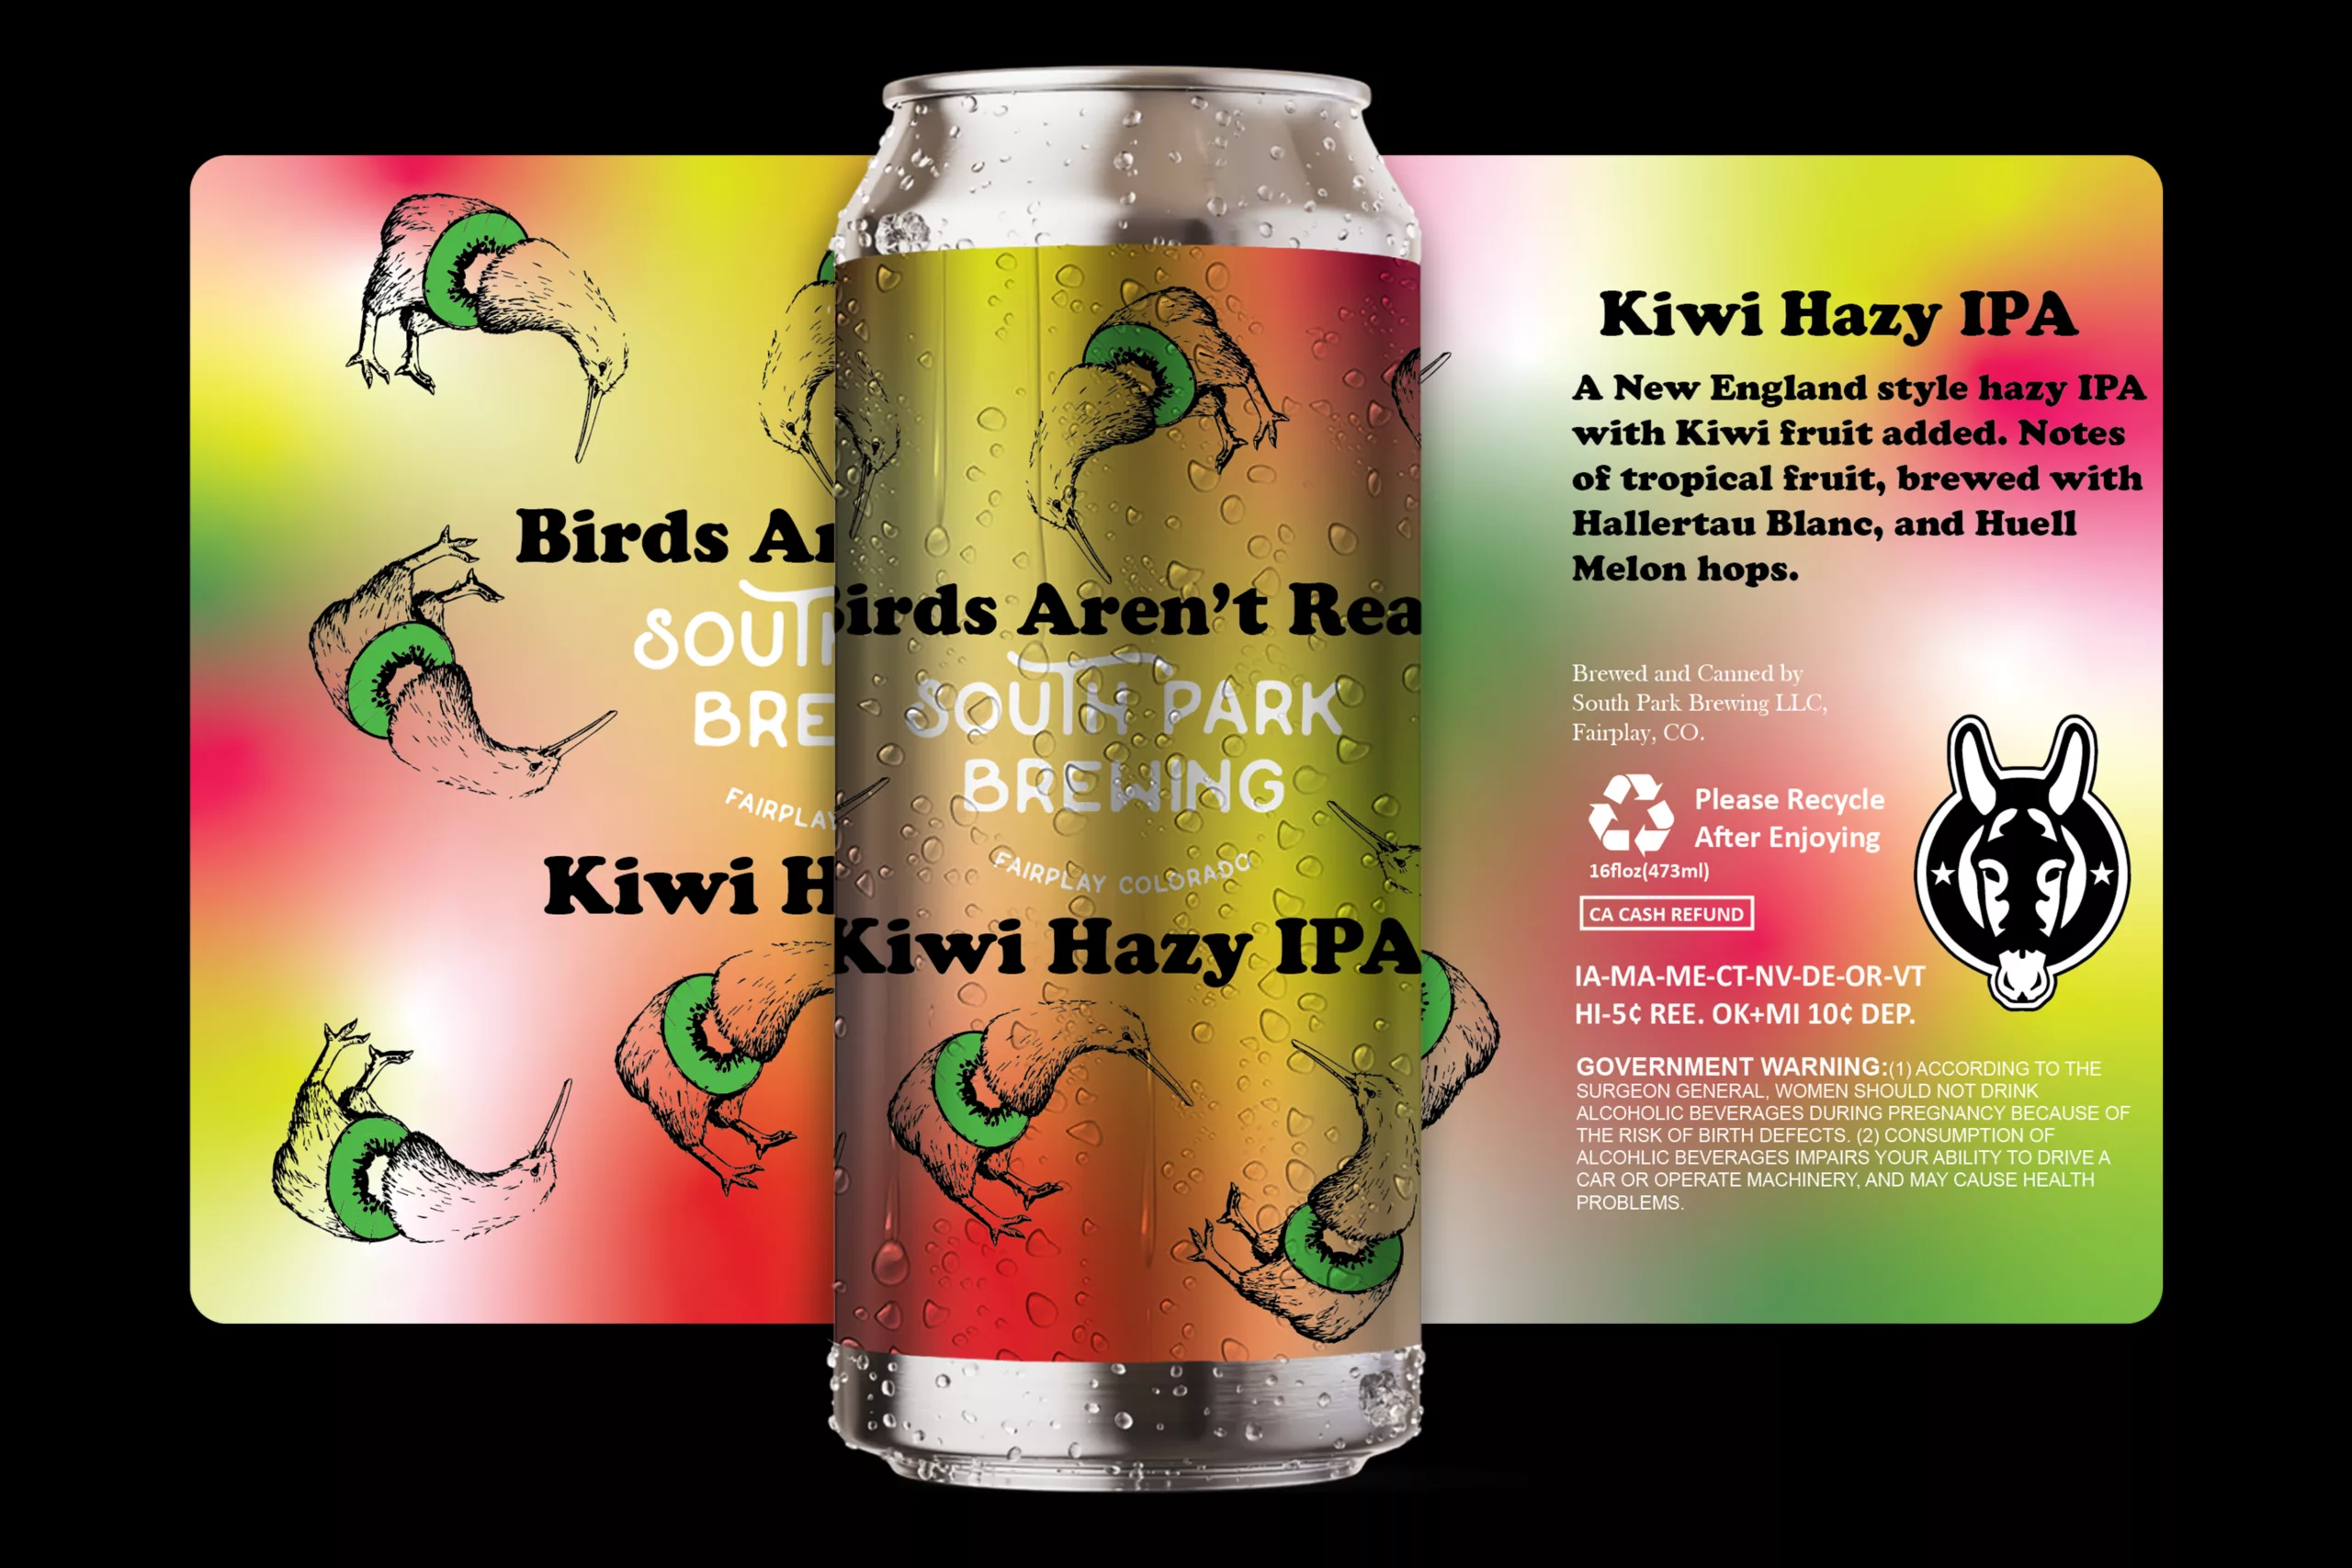 Kiwi Hazy IPA | Birds Aren't Real